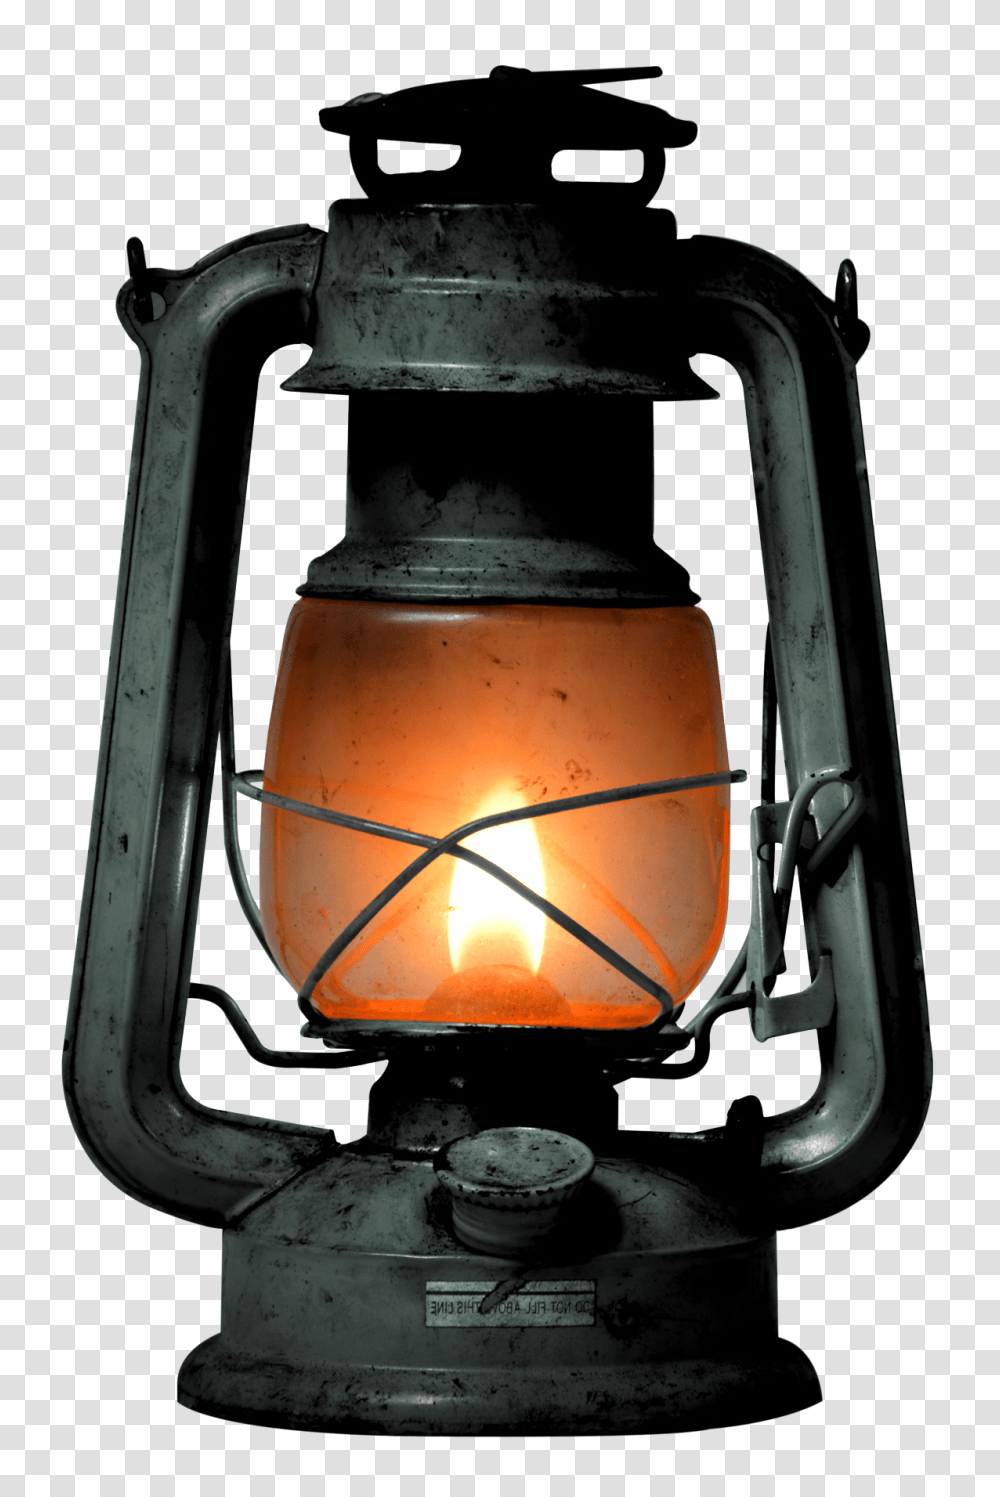 Old Kerosene Lamp Image, Lantern, Fire Hydrant, Lampshade Transparent Png